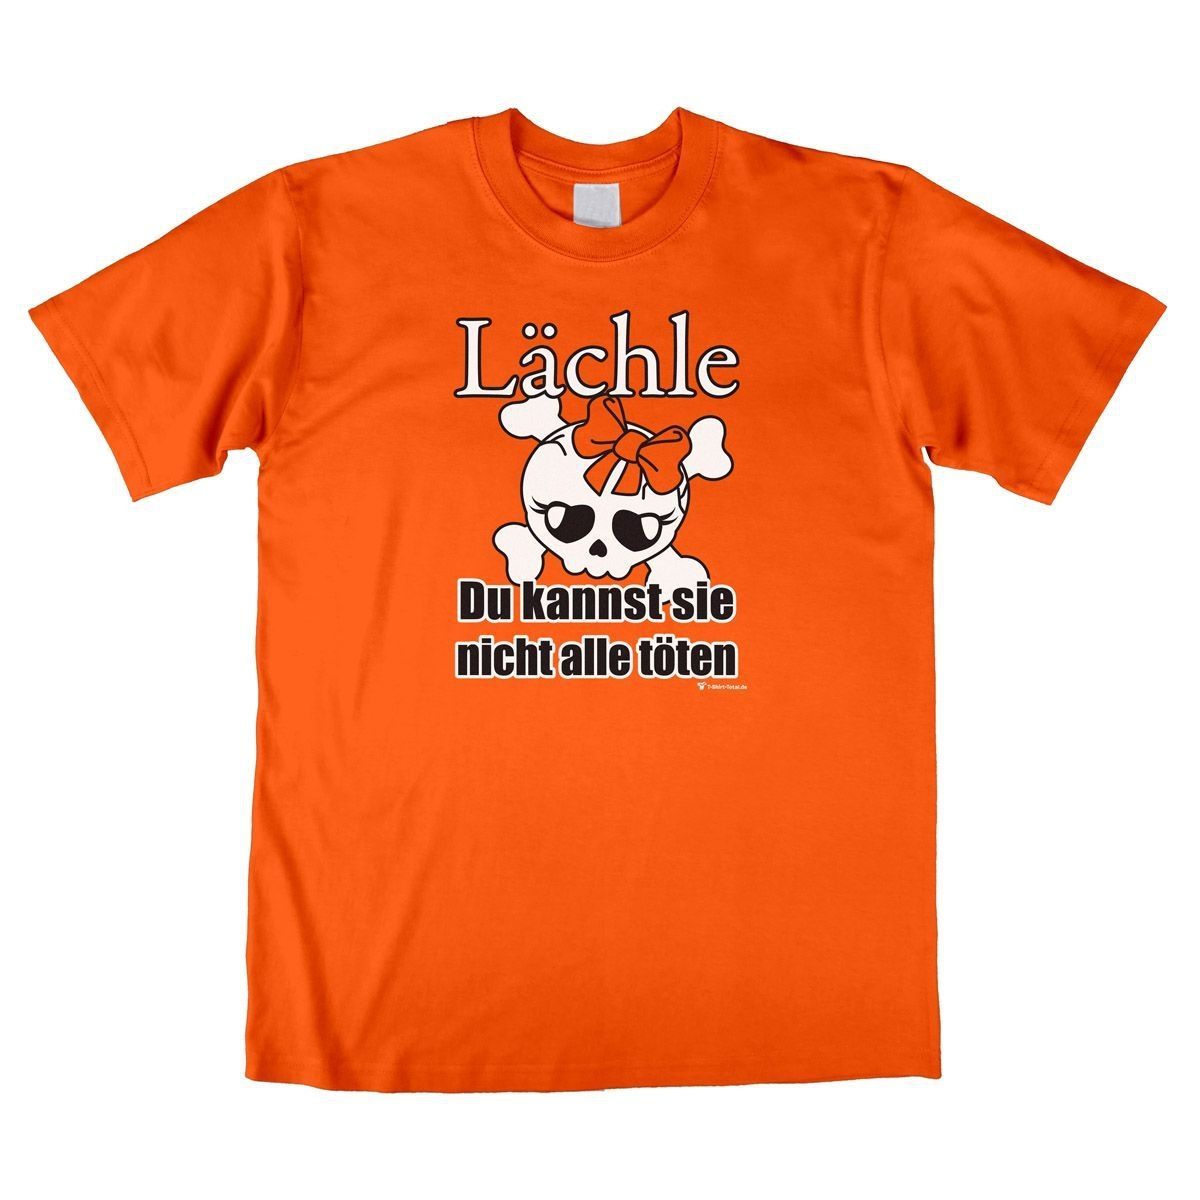 Lächle Unisex T-Shirt orange Medium